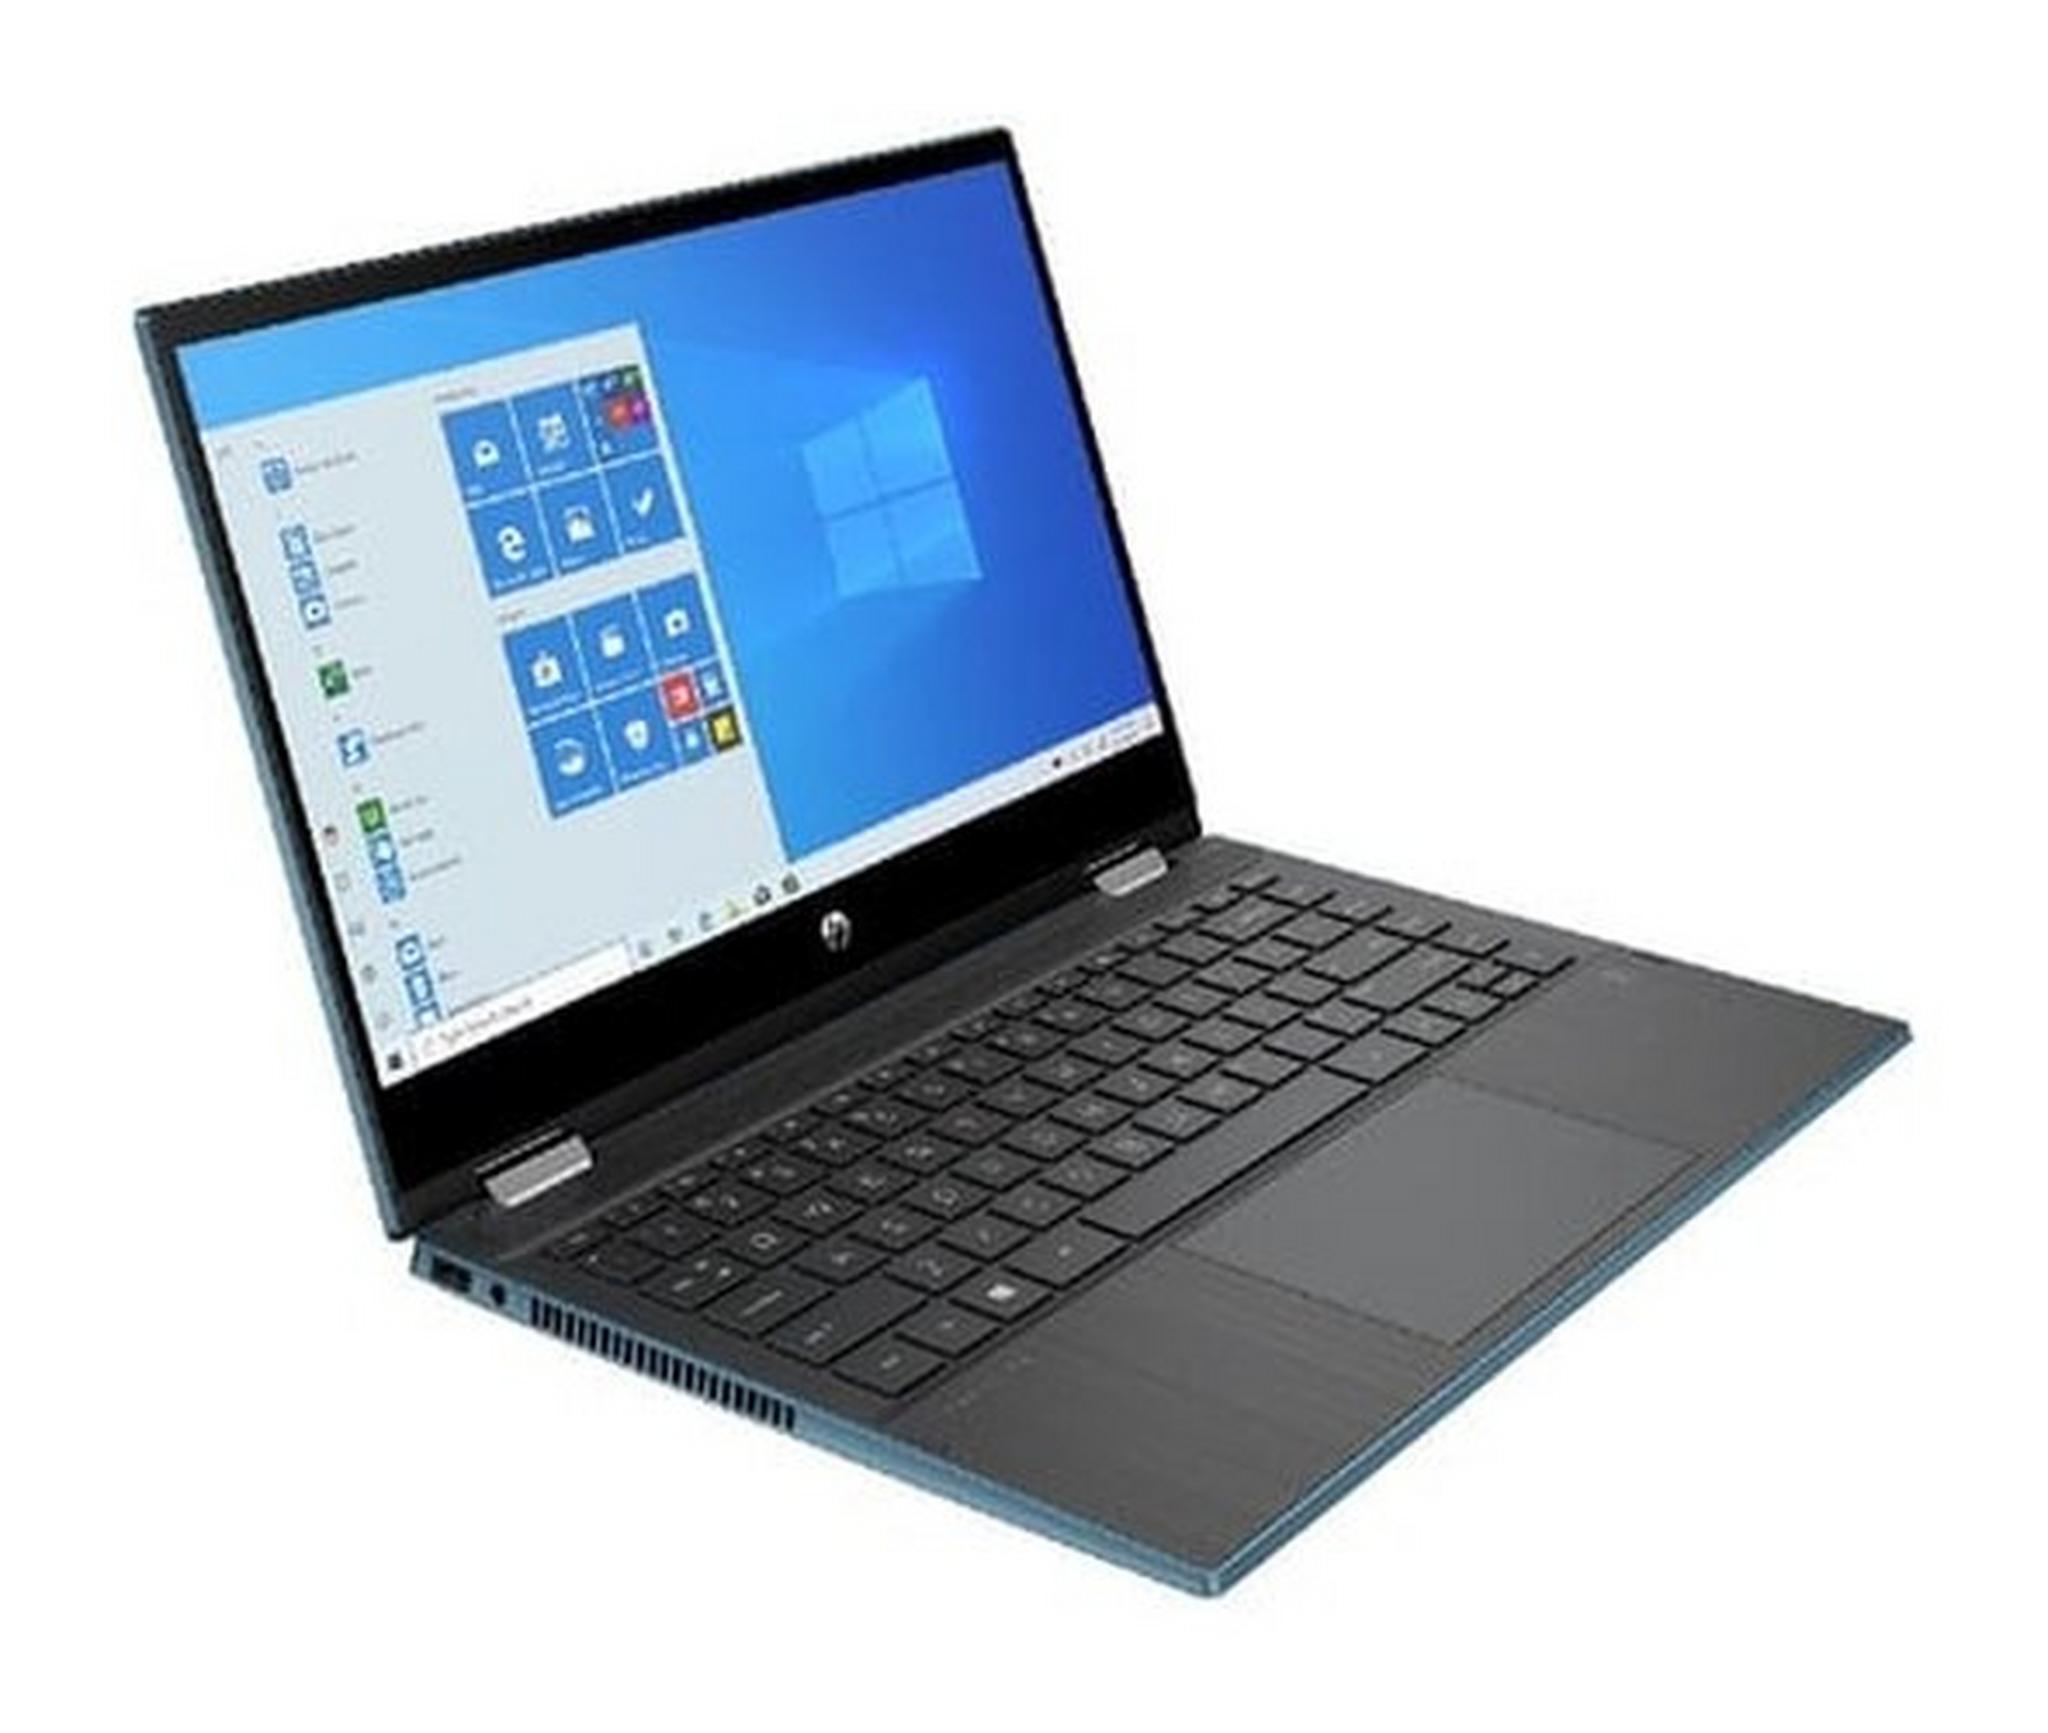 HP Pavilion x360 Intel Pentium 7505 4GB RAM 128GB SSD 14" Convertible Laptop - Teal